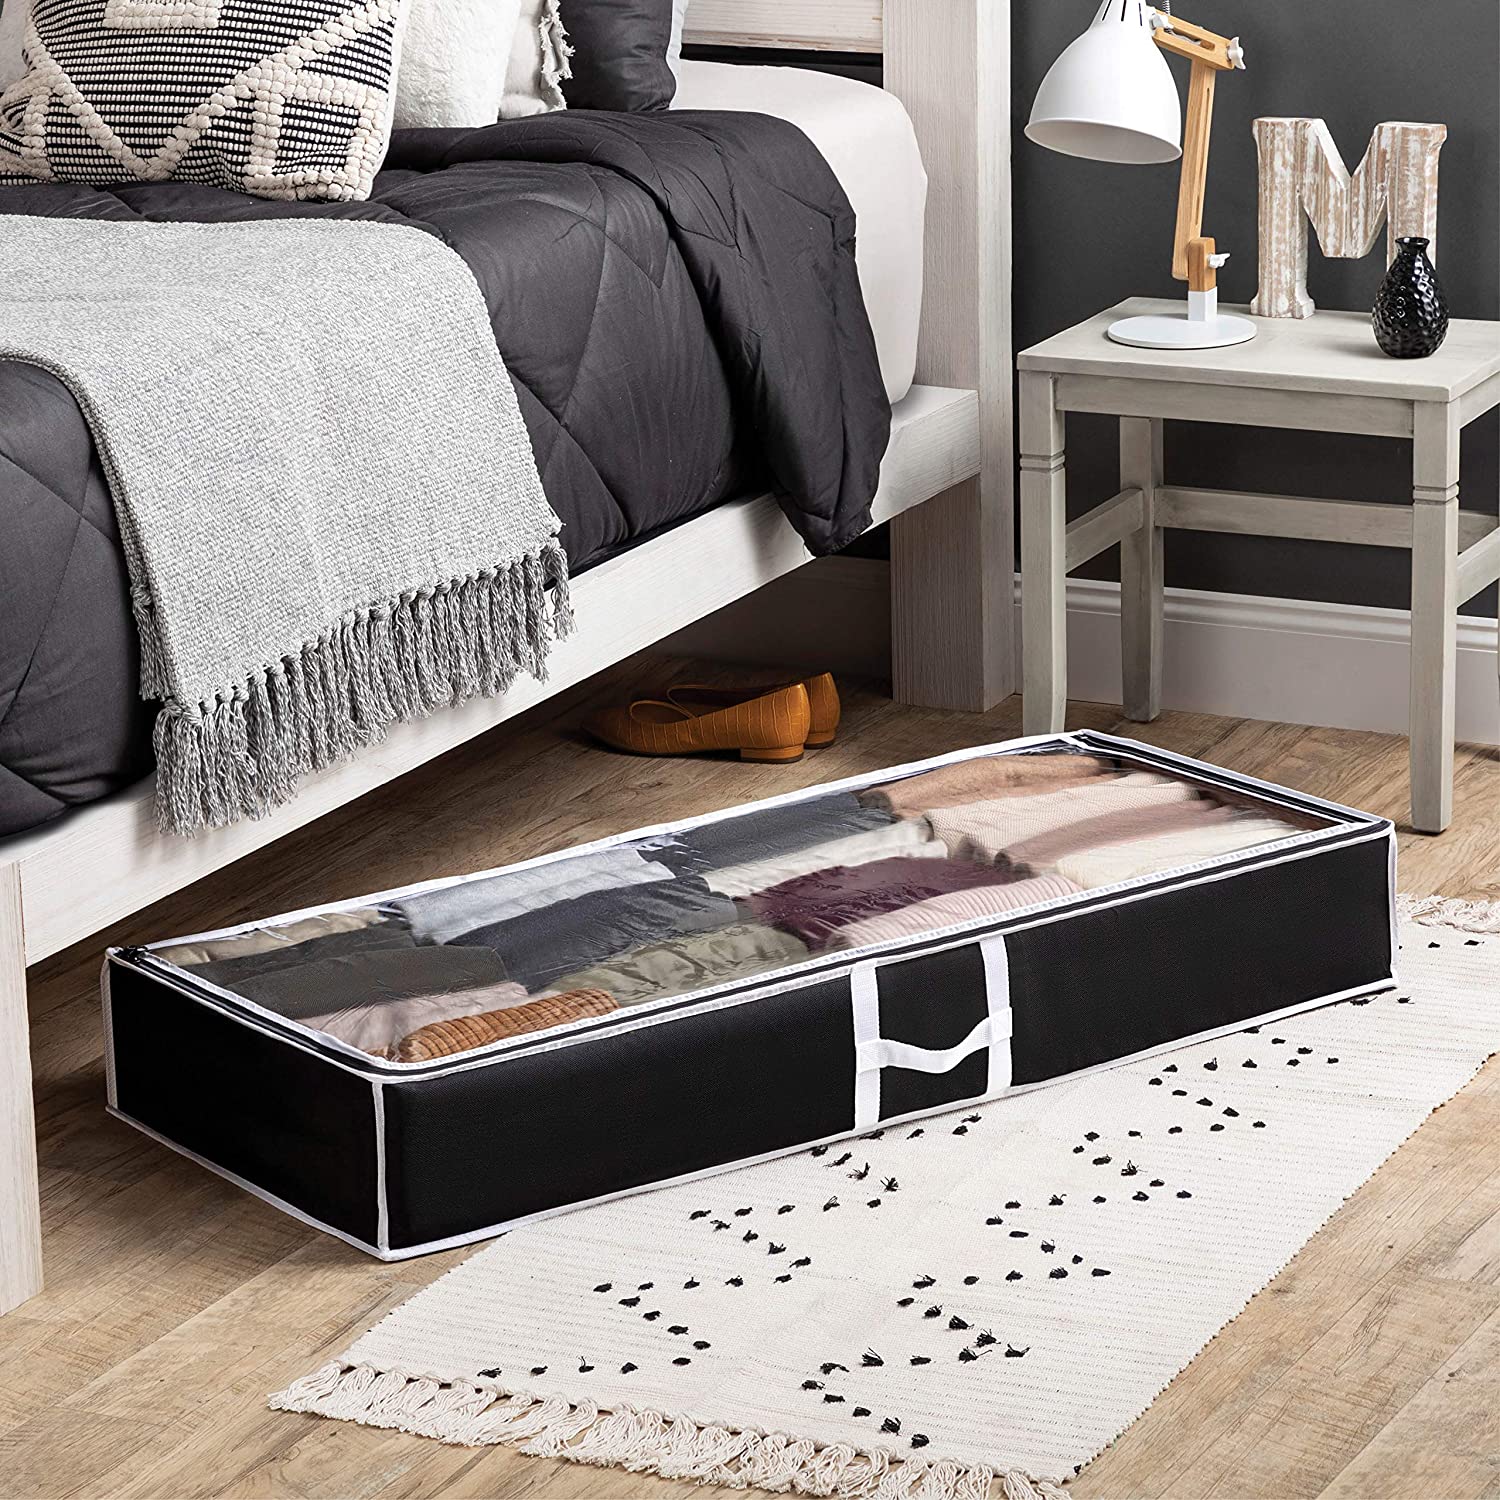 7-under-bed-fabric-storage-box